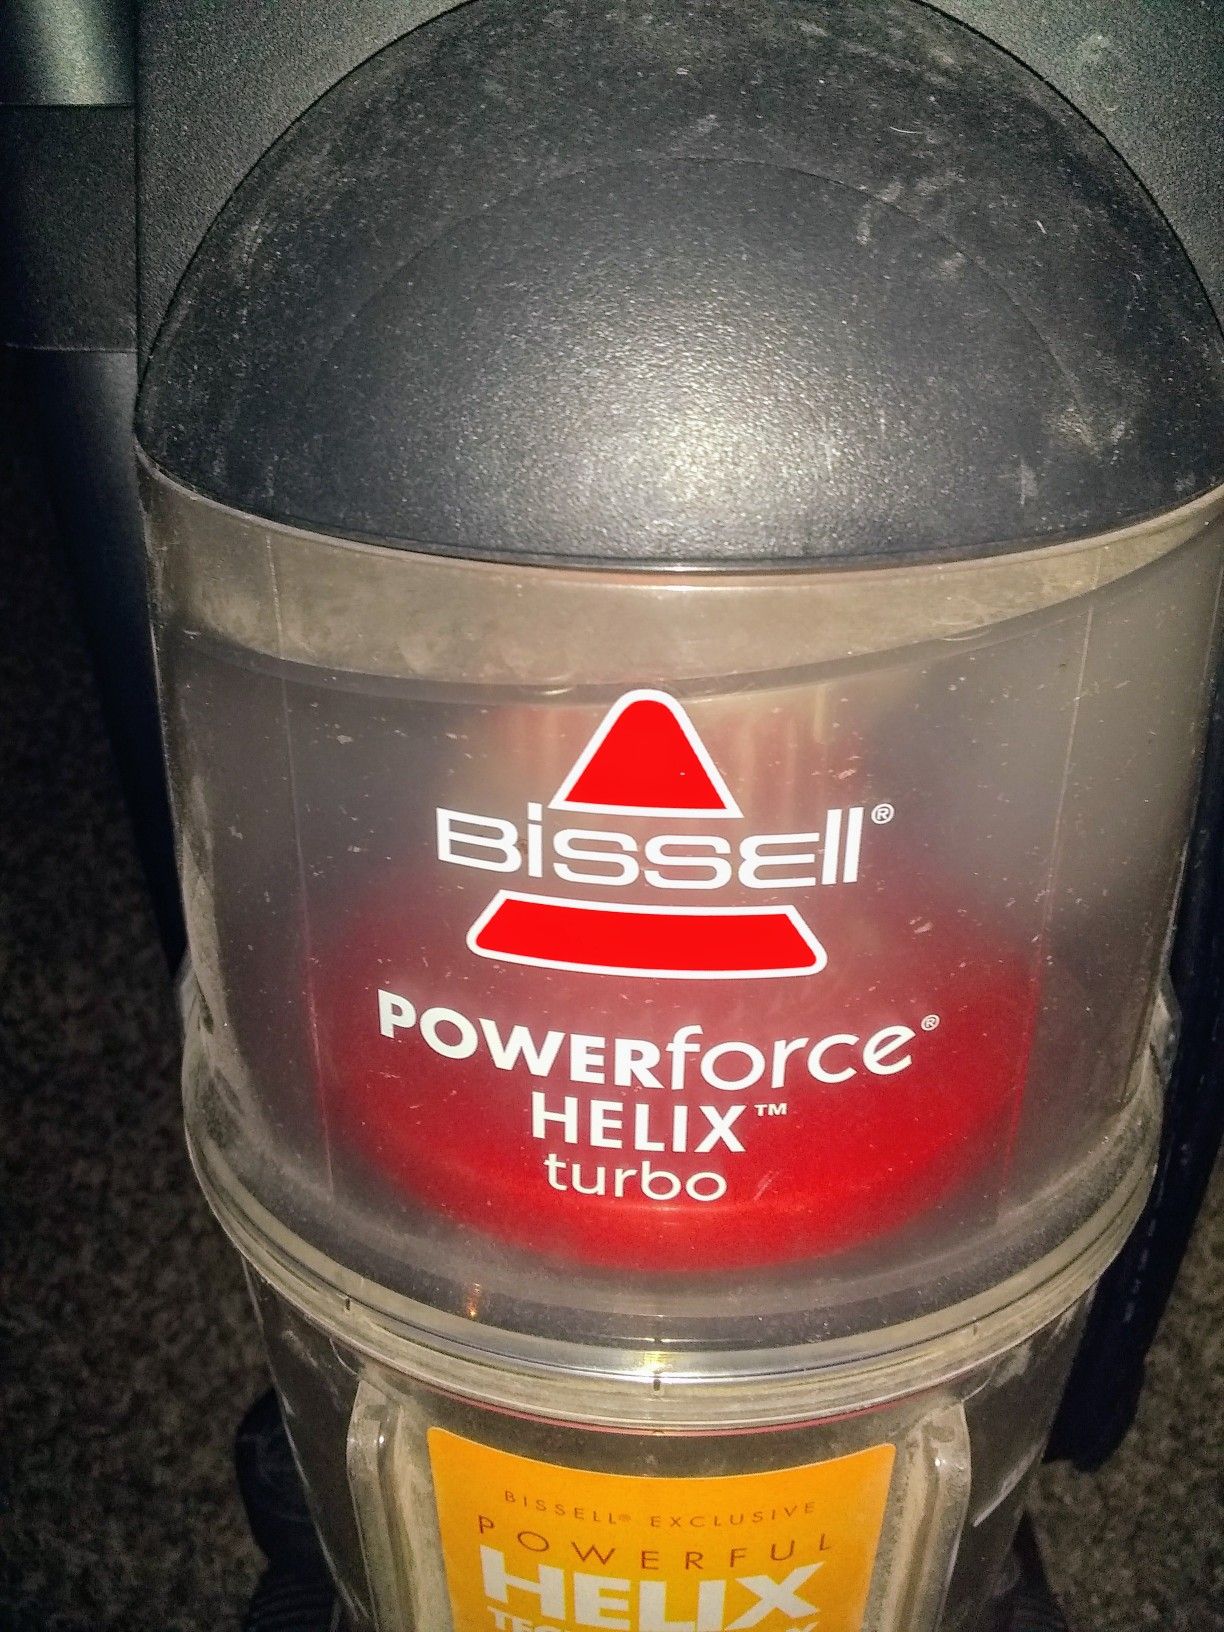 Bissell powerforce helix vacuum